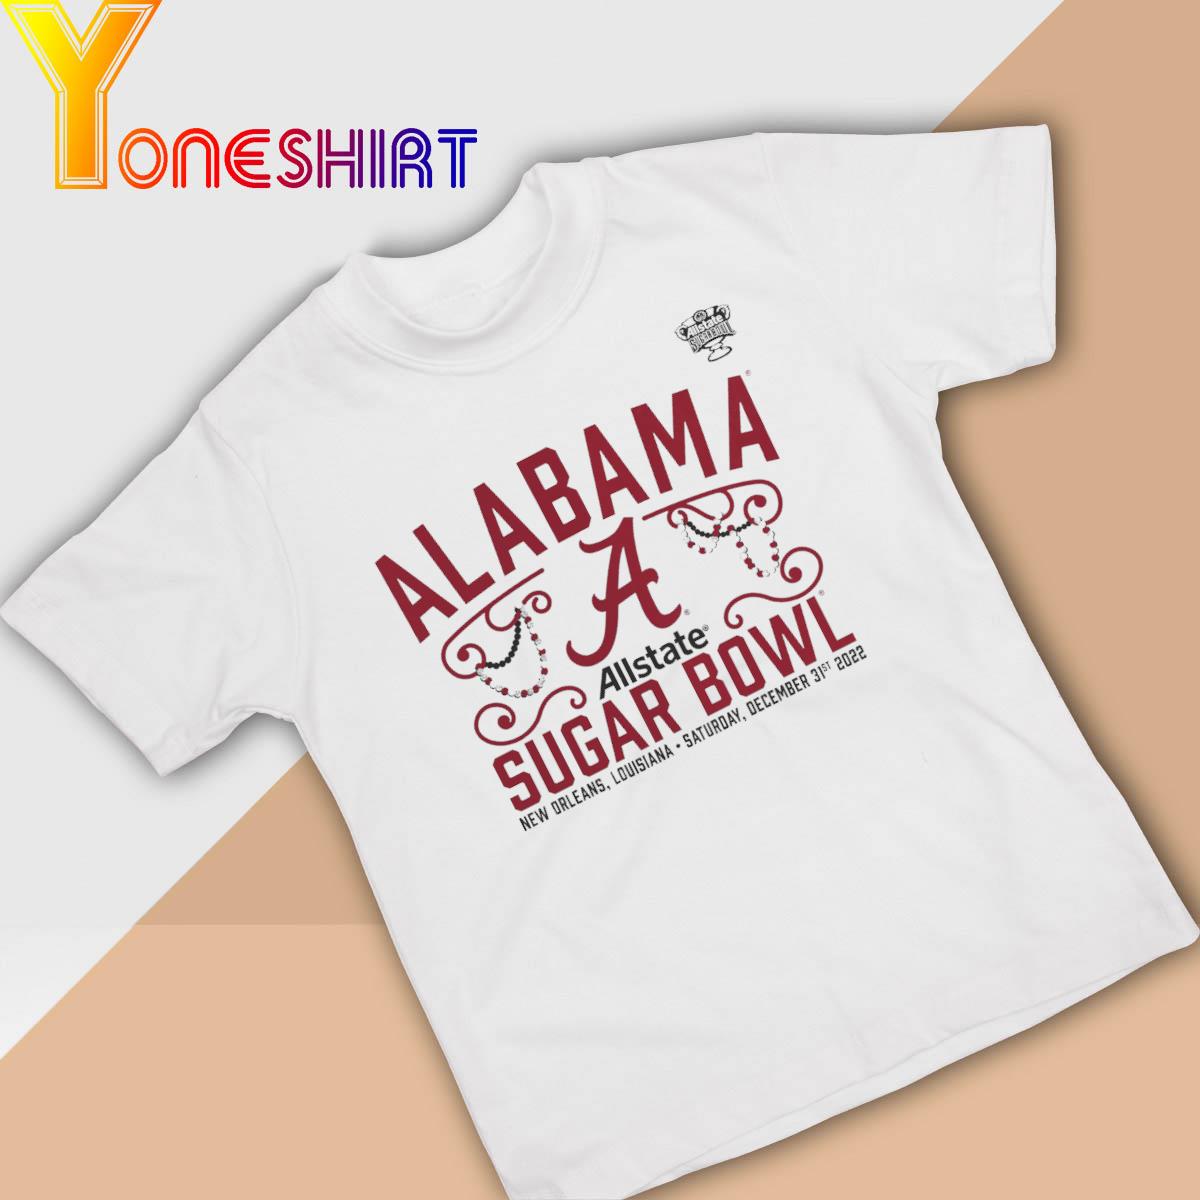 Alabama Crimson Tide Allstate Sugar Bowl New Orleans Louisiana 2022 shirt